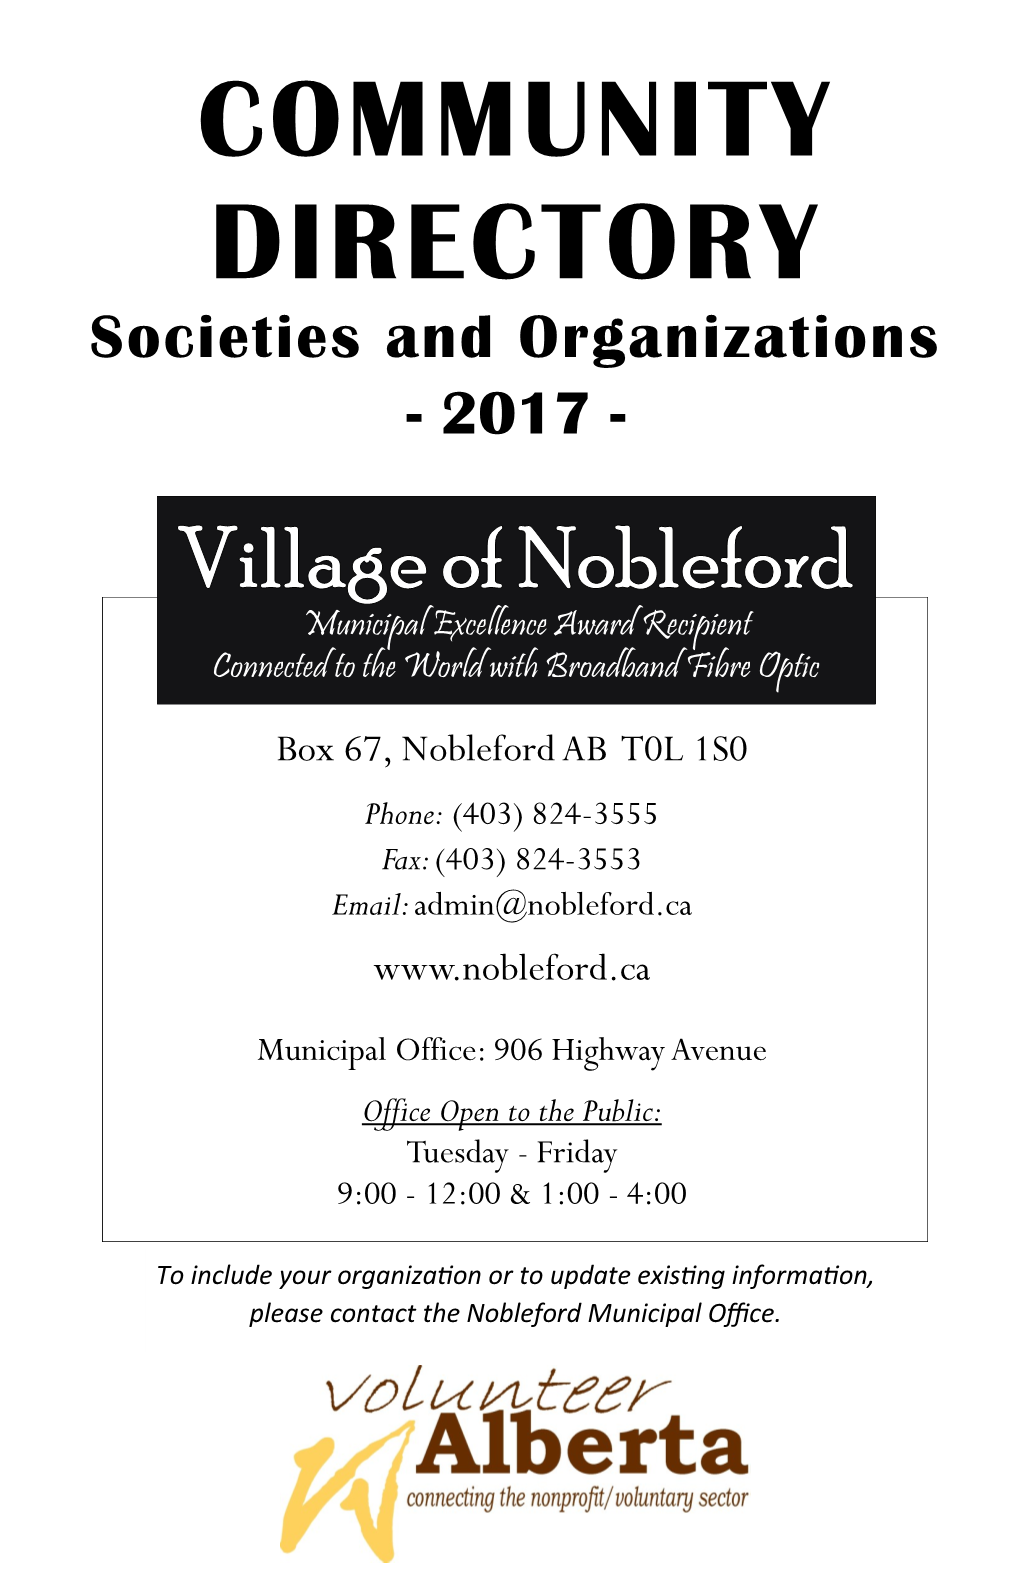 Nobleford Community Directory, 2017